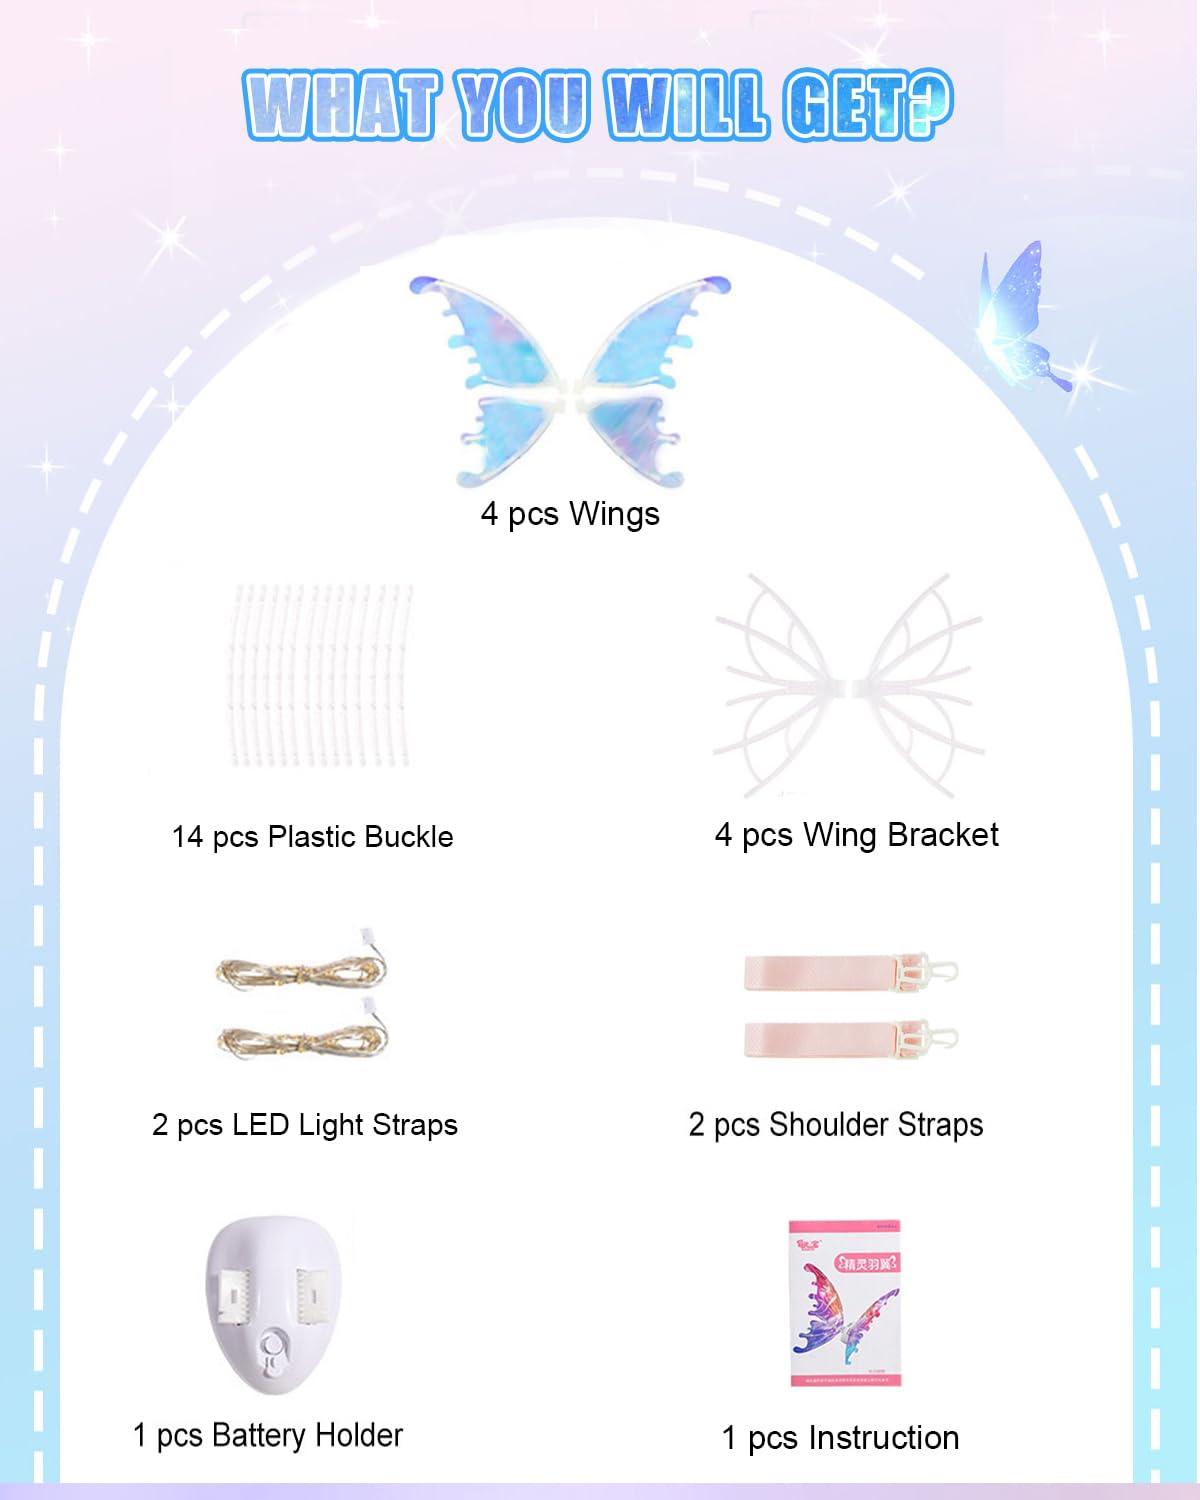 Enchant Wings™ 2.0 - The Fairy Wings